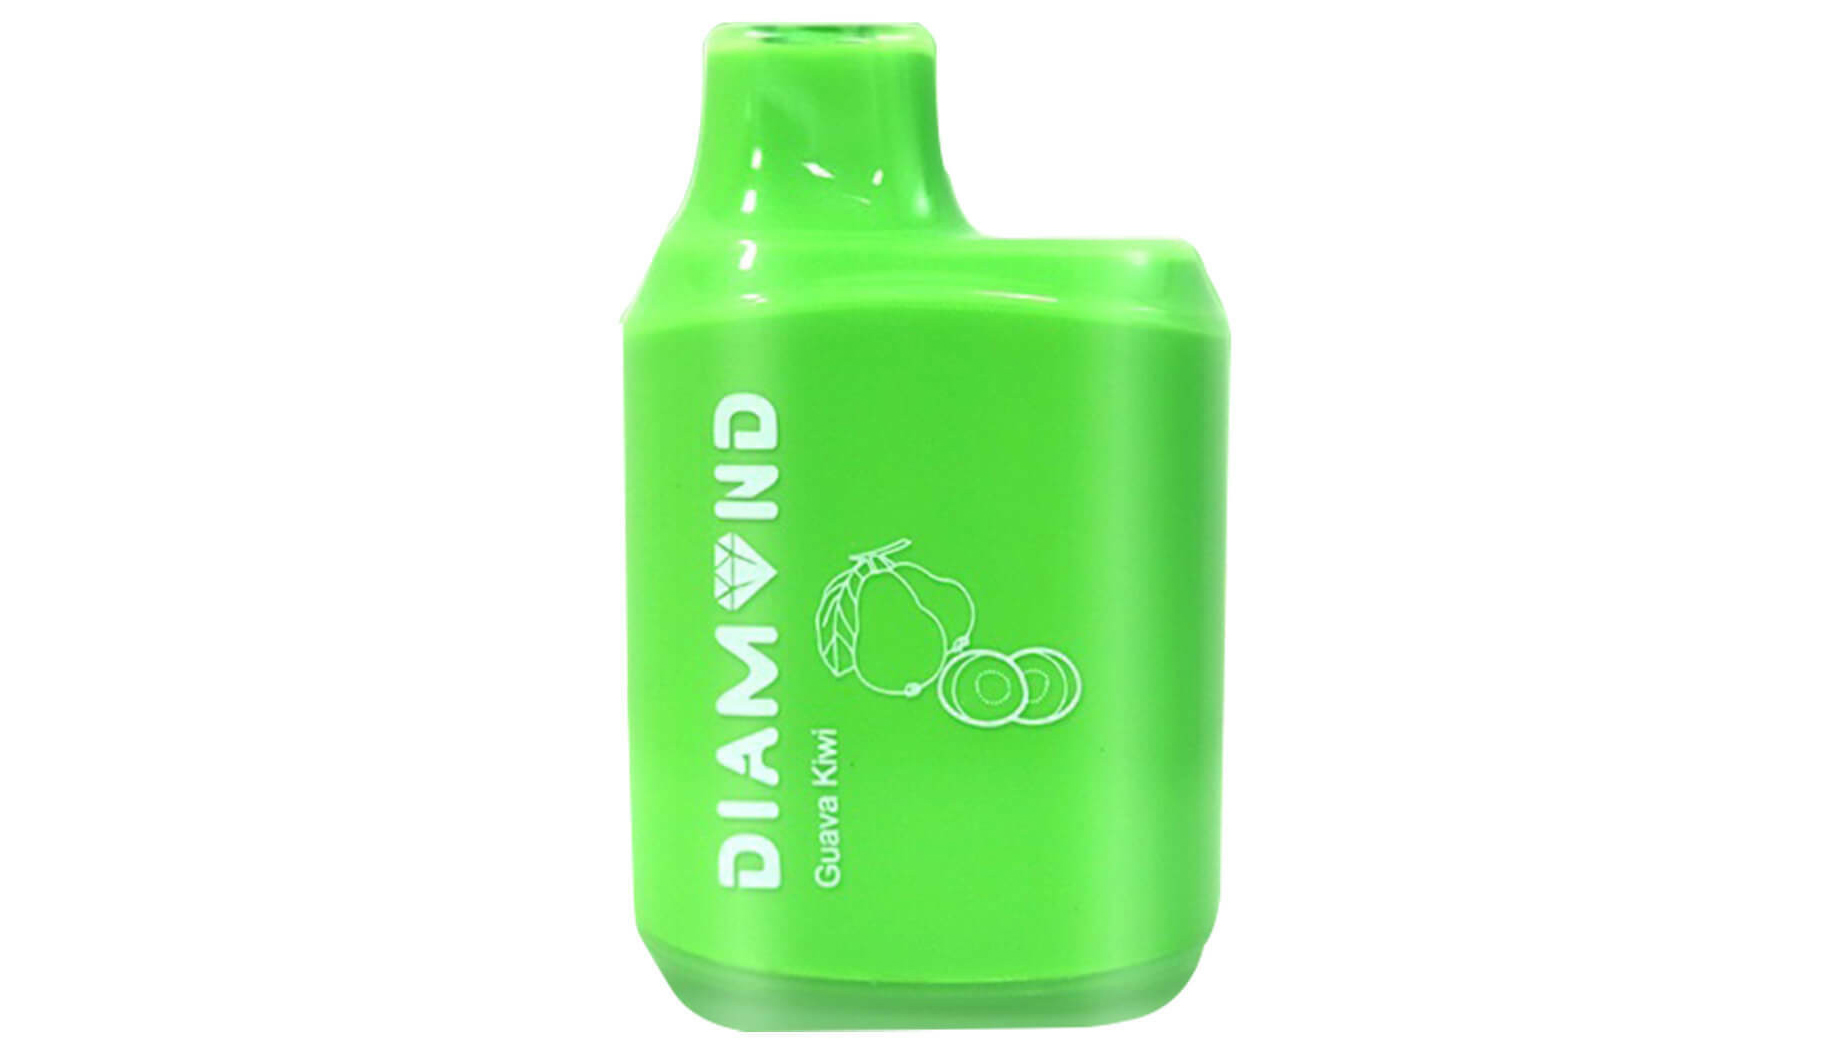 Mosmo Diamond Disposable Device Review